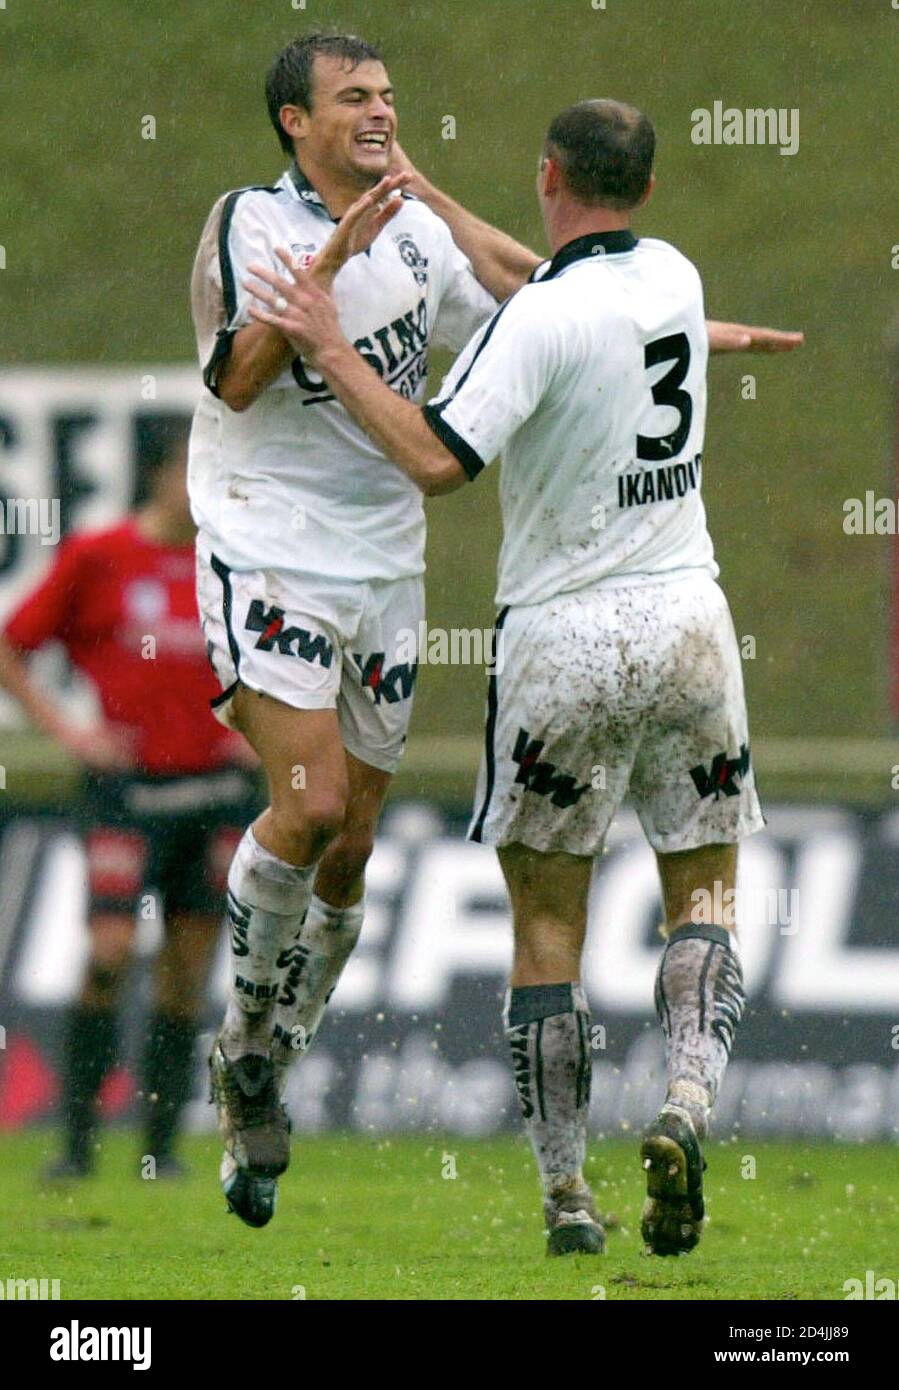 In der Fussball-Bundesliga spielte heute, am 13. September 2003, Admira gegen Bregenz. Alexander Hauser (L) und Asmir Ikanovic jubeln nach dem 0:1. REUTERS/Robert Zolles REUTERS  HPB/ Stock Photo